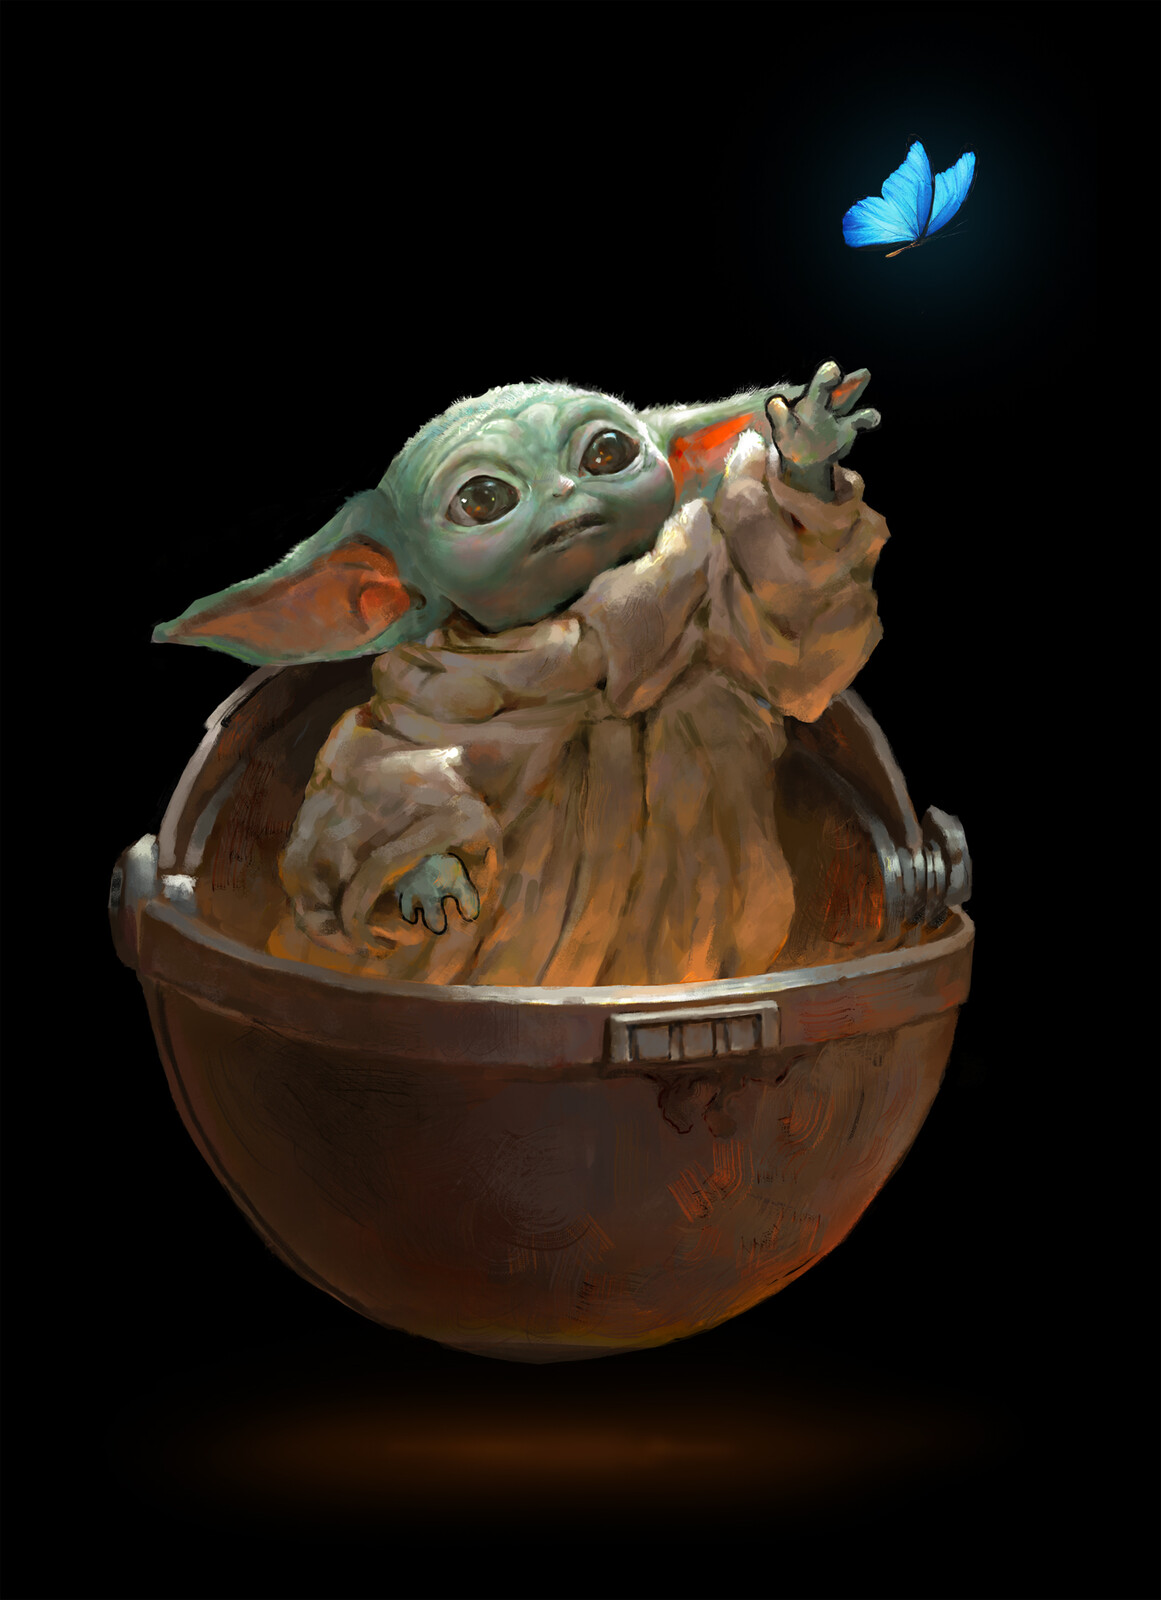 Baby Yoda (Grogu)